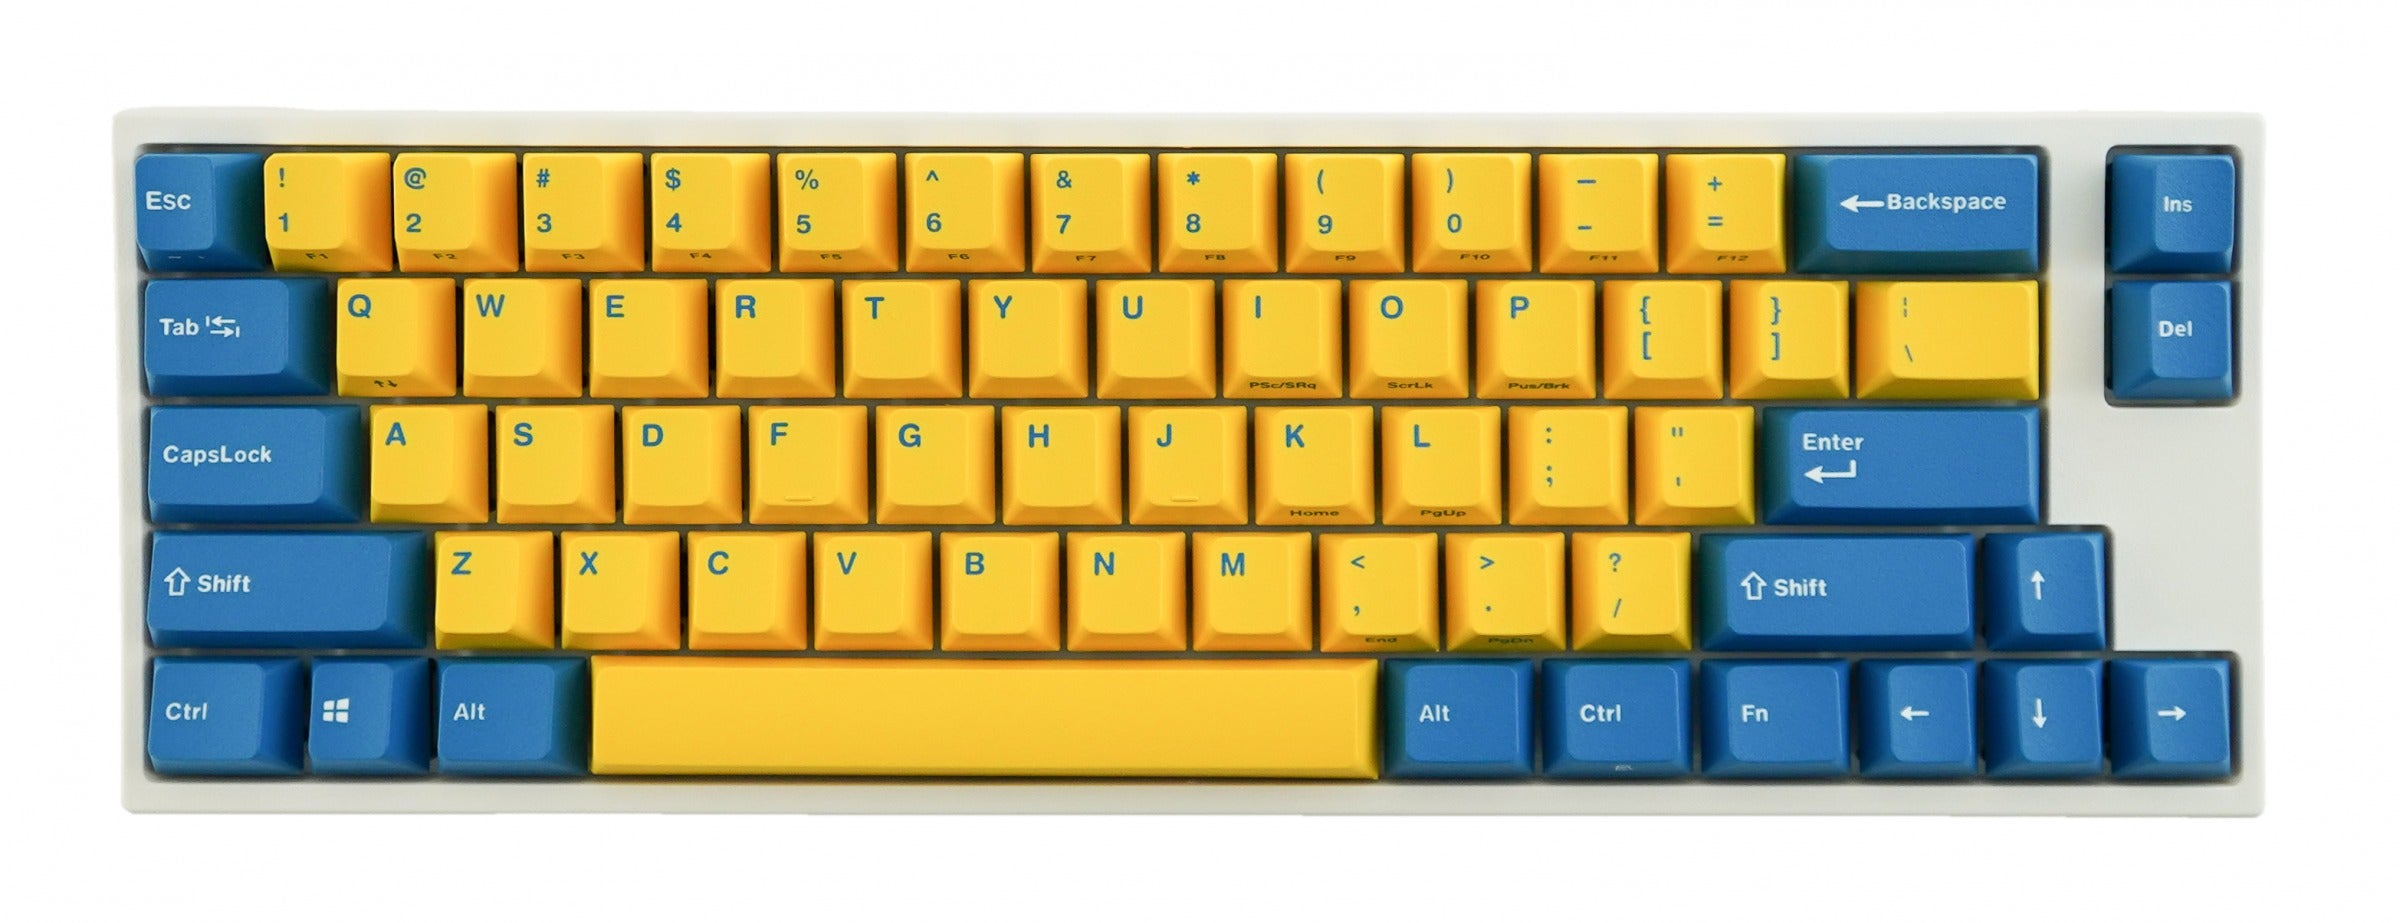 Leopold FC660M Yellow/Blue Mechanical Keyboard